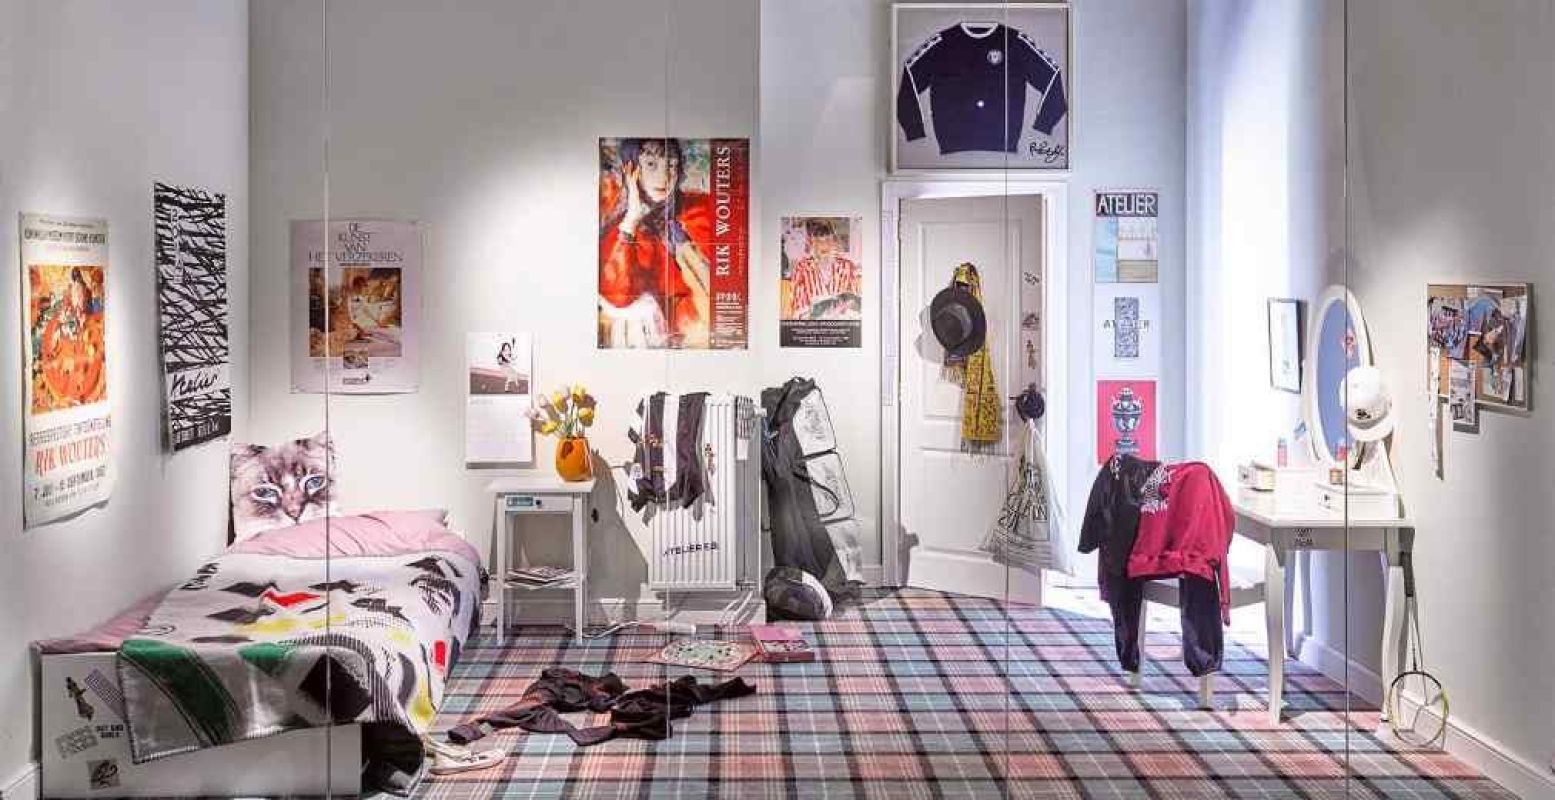 Teenage Dreams. Foto: MoMu Fashion Museum Antwerp / Stany Dederen